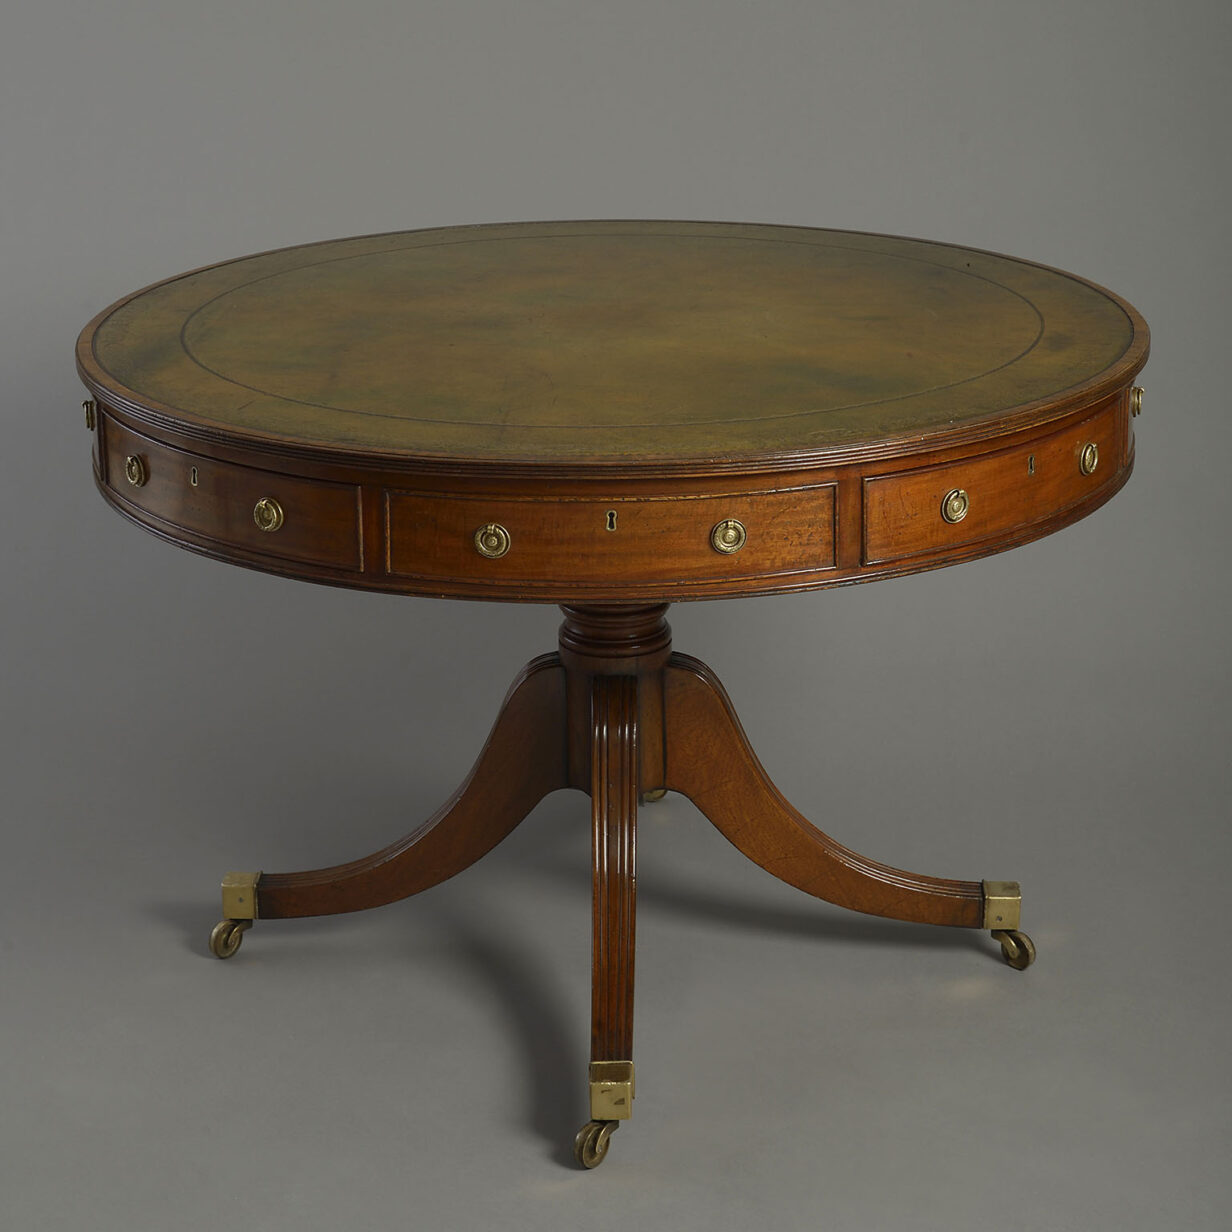 George III Style Drum Table